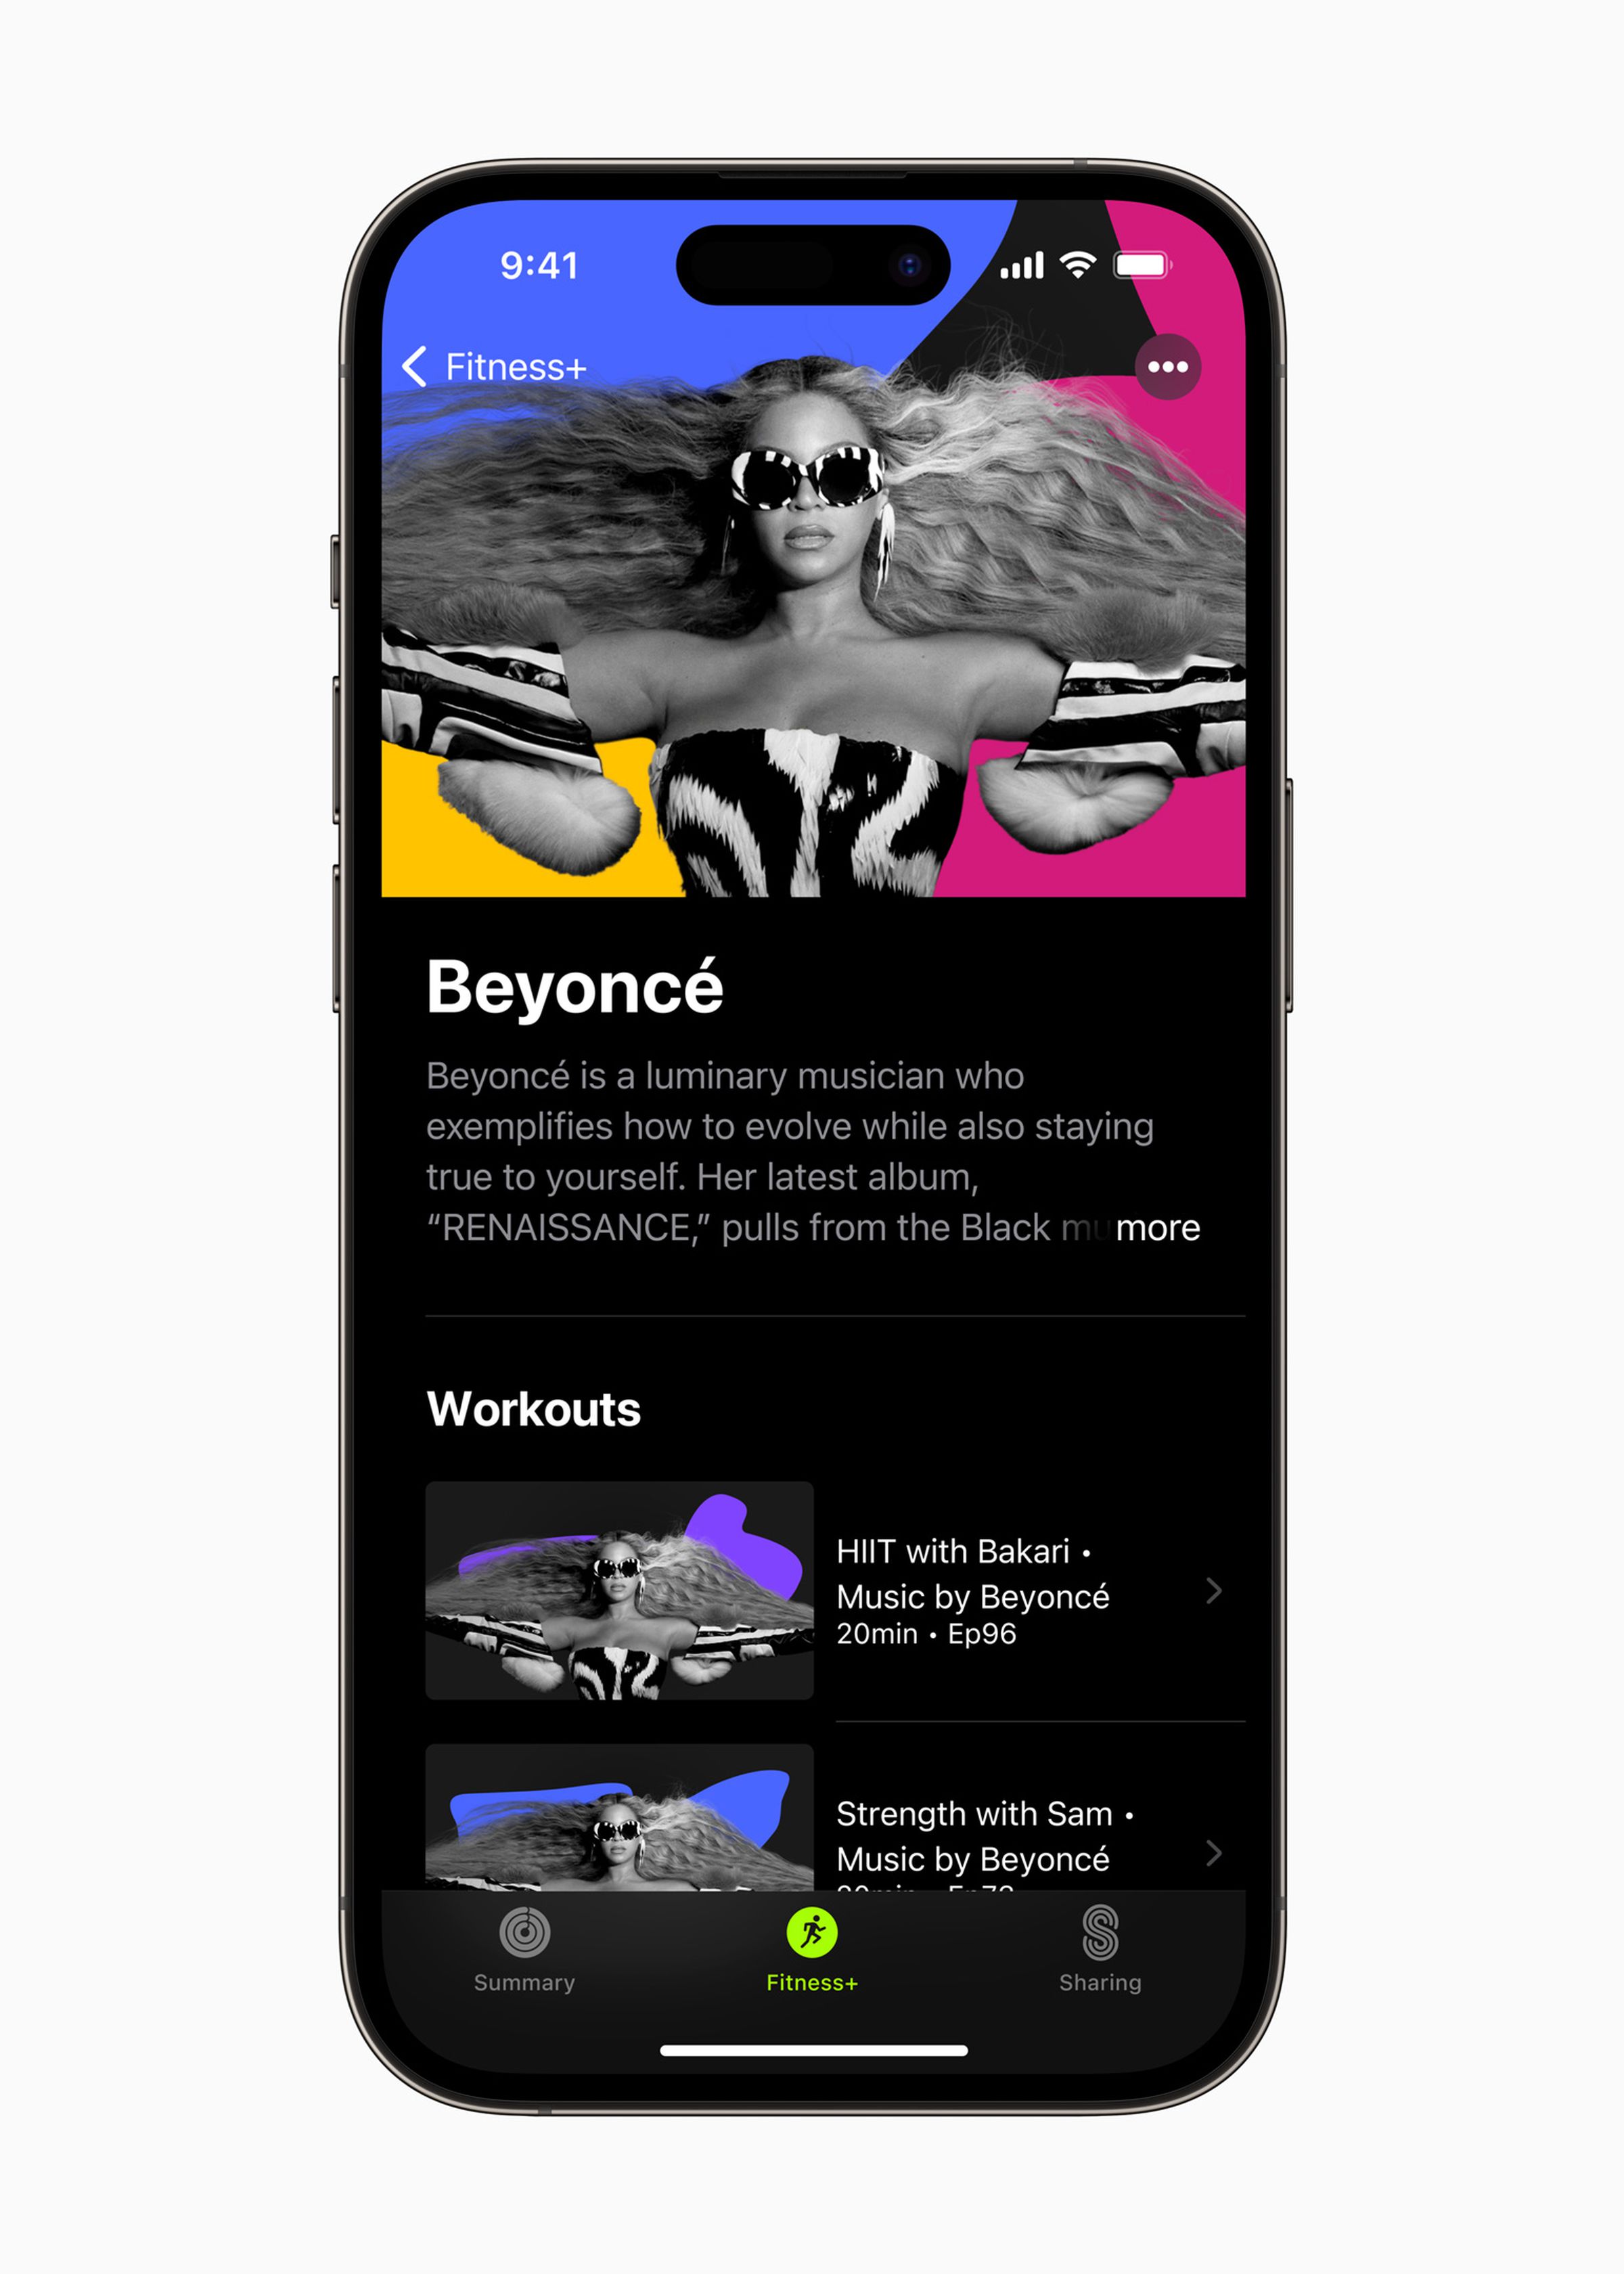 Beyoncé is a popular fixture on fitness tech platforms.